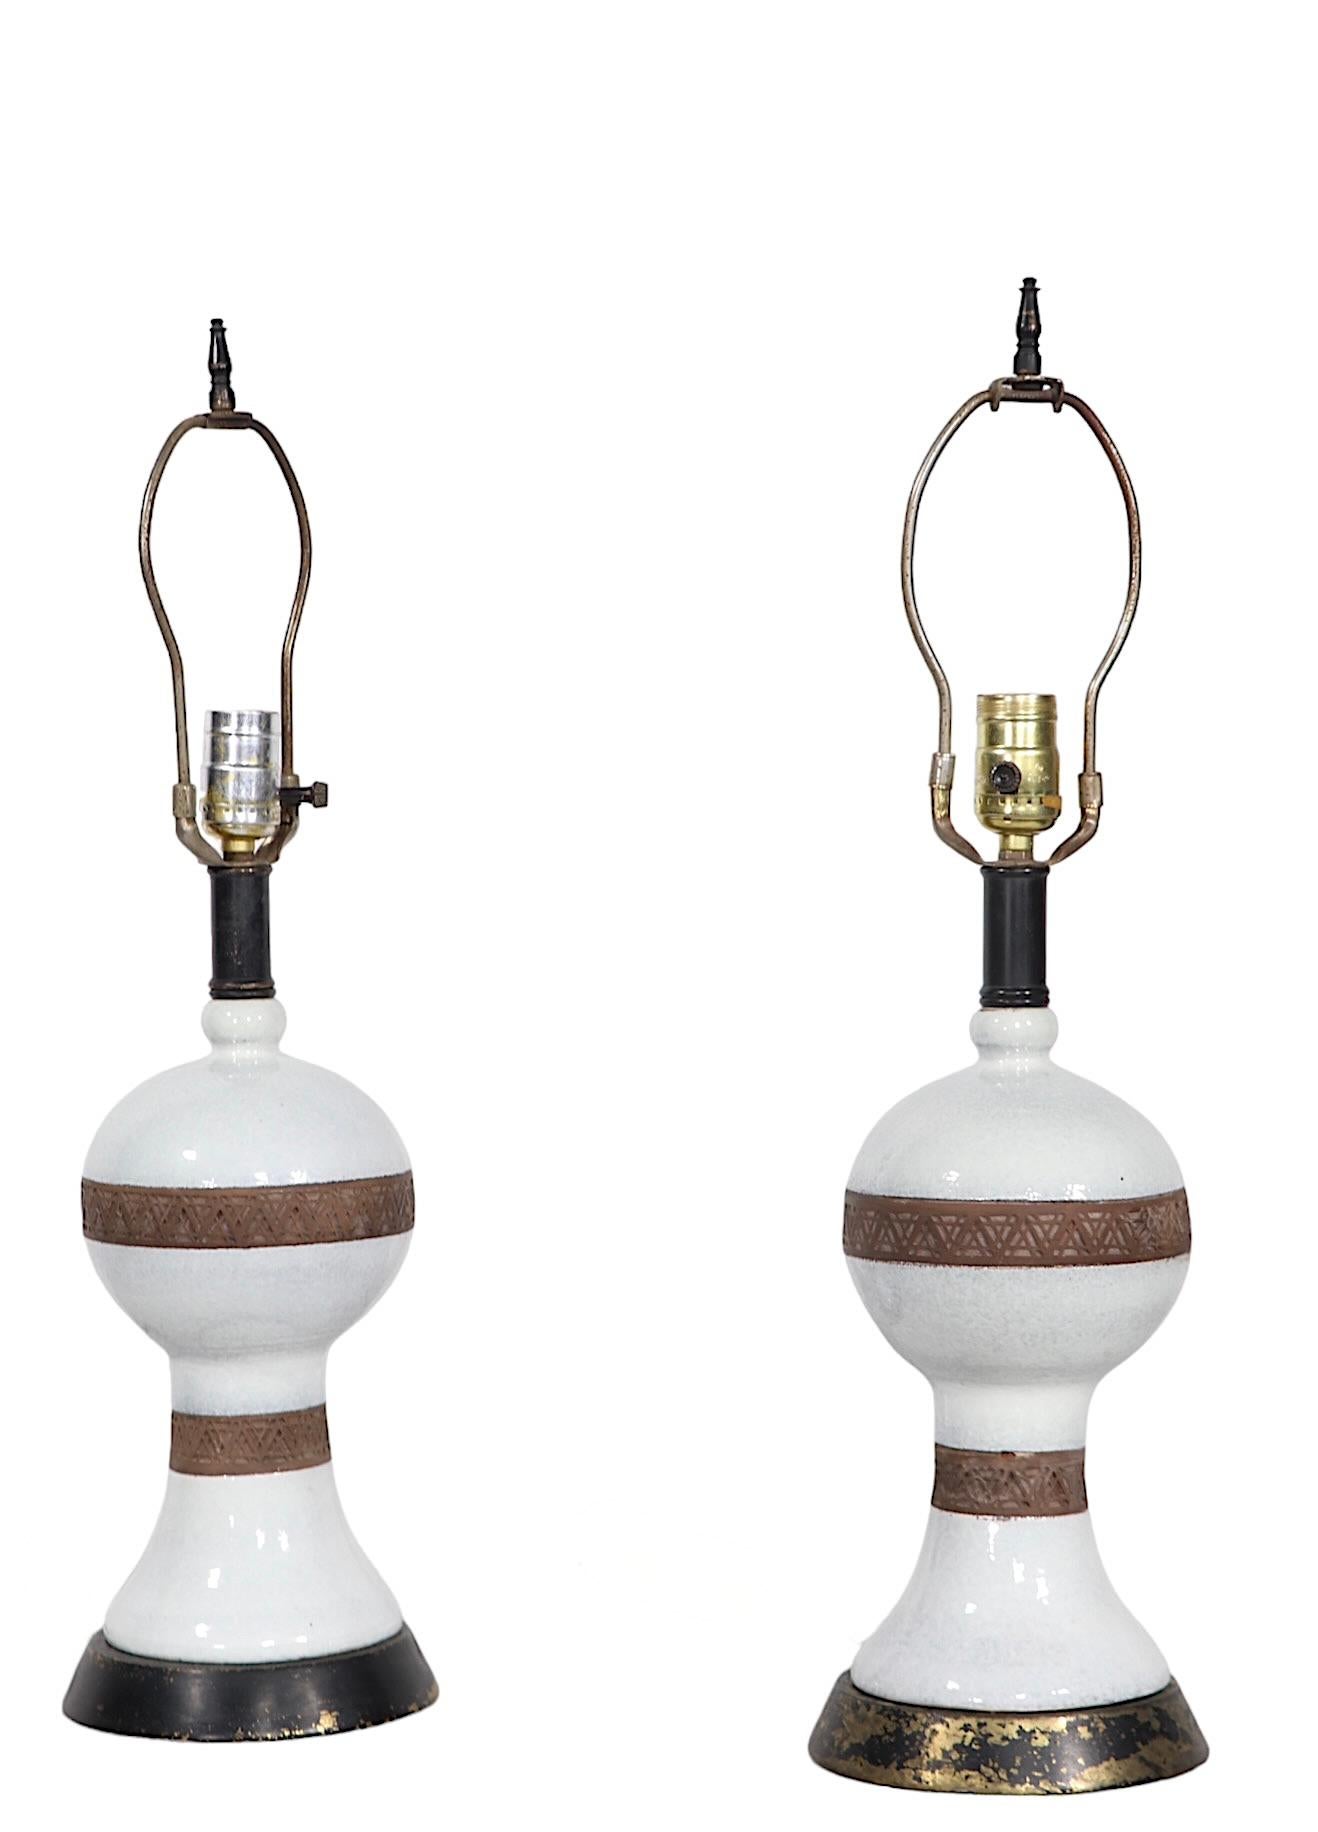 Pr. Ceramic Table Lamps Made in Italy Attr. to Urbano Zaccagnini  For Sale 6